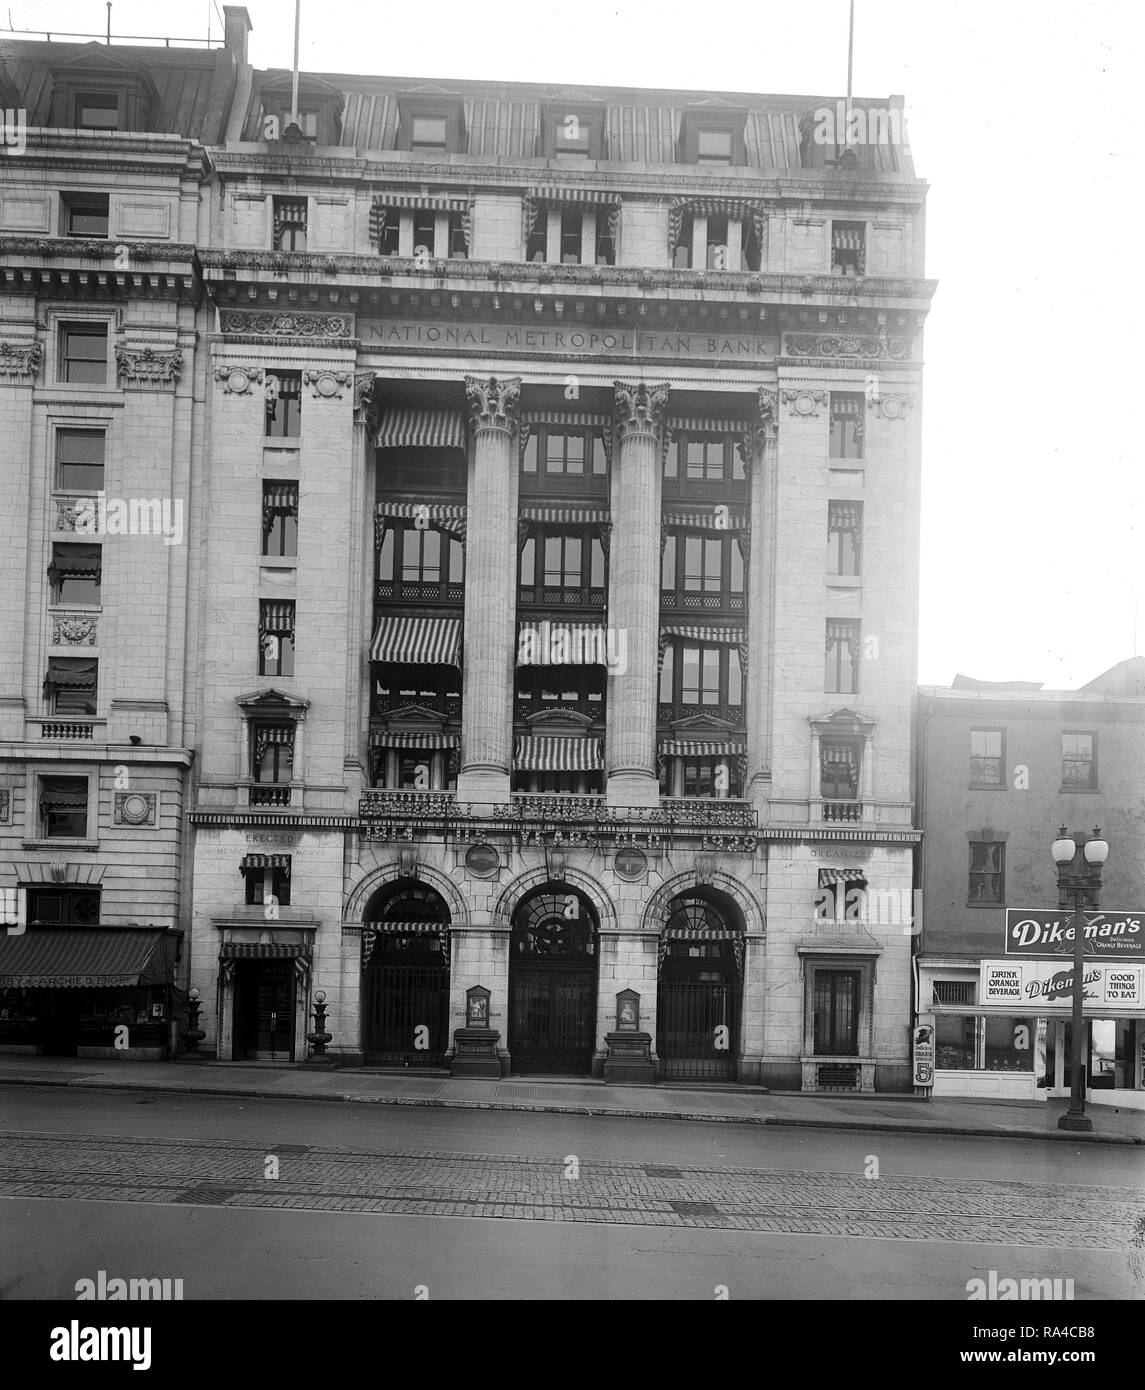 Metropoliatan Bank ca. early 1900s Stock Photo